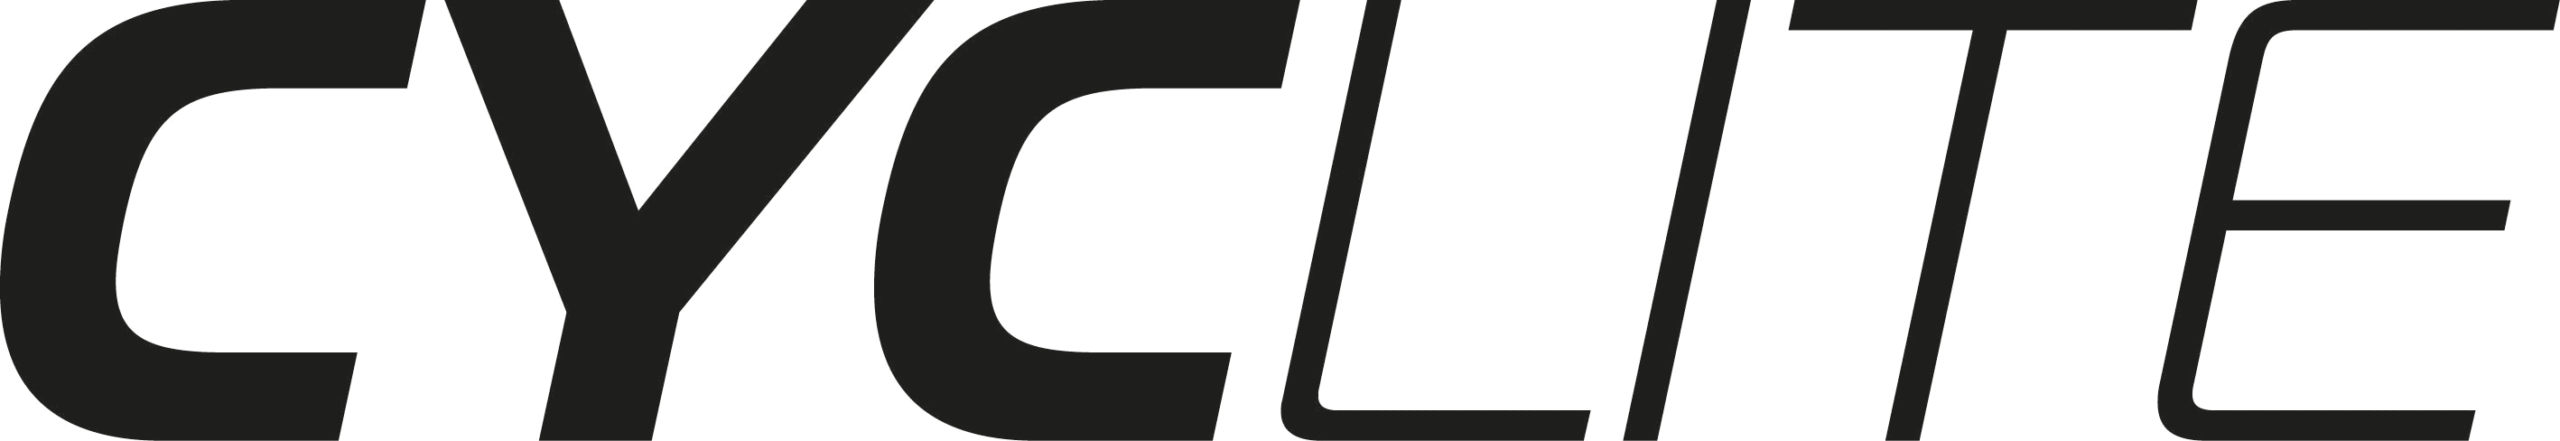 CYCLITE Logo 240mm 1 scaled